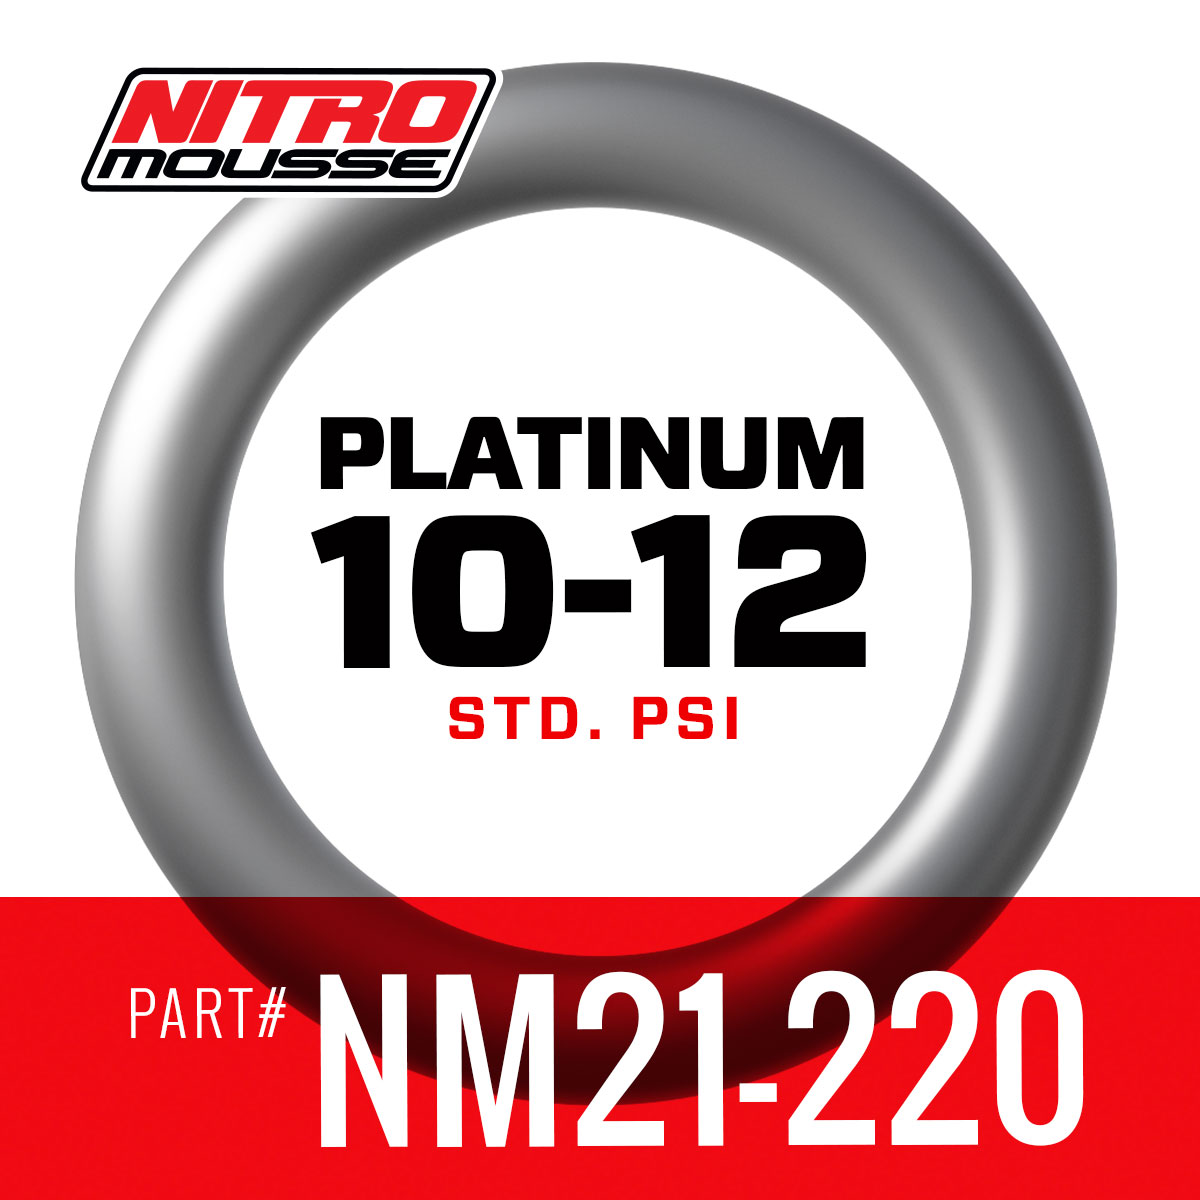  Pirelli Scprn Mx-x 80/100-21 A/t Frt Tires Pn:2133700